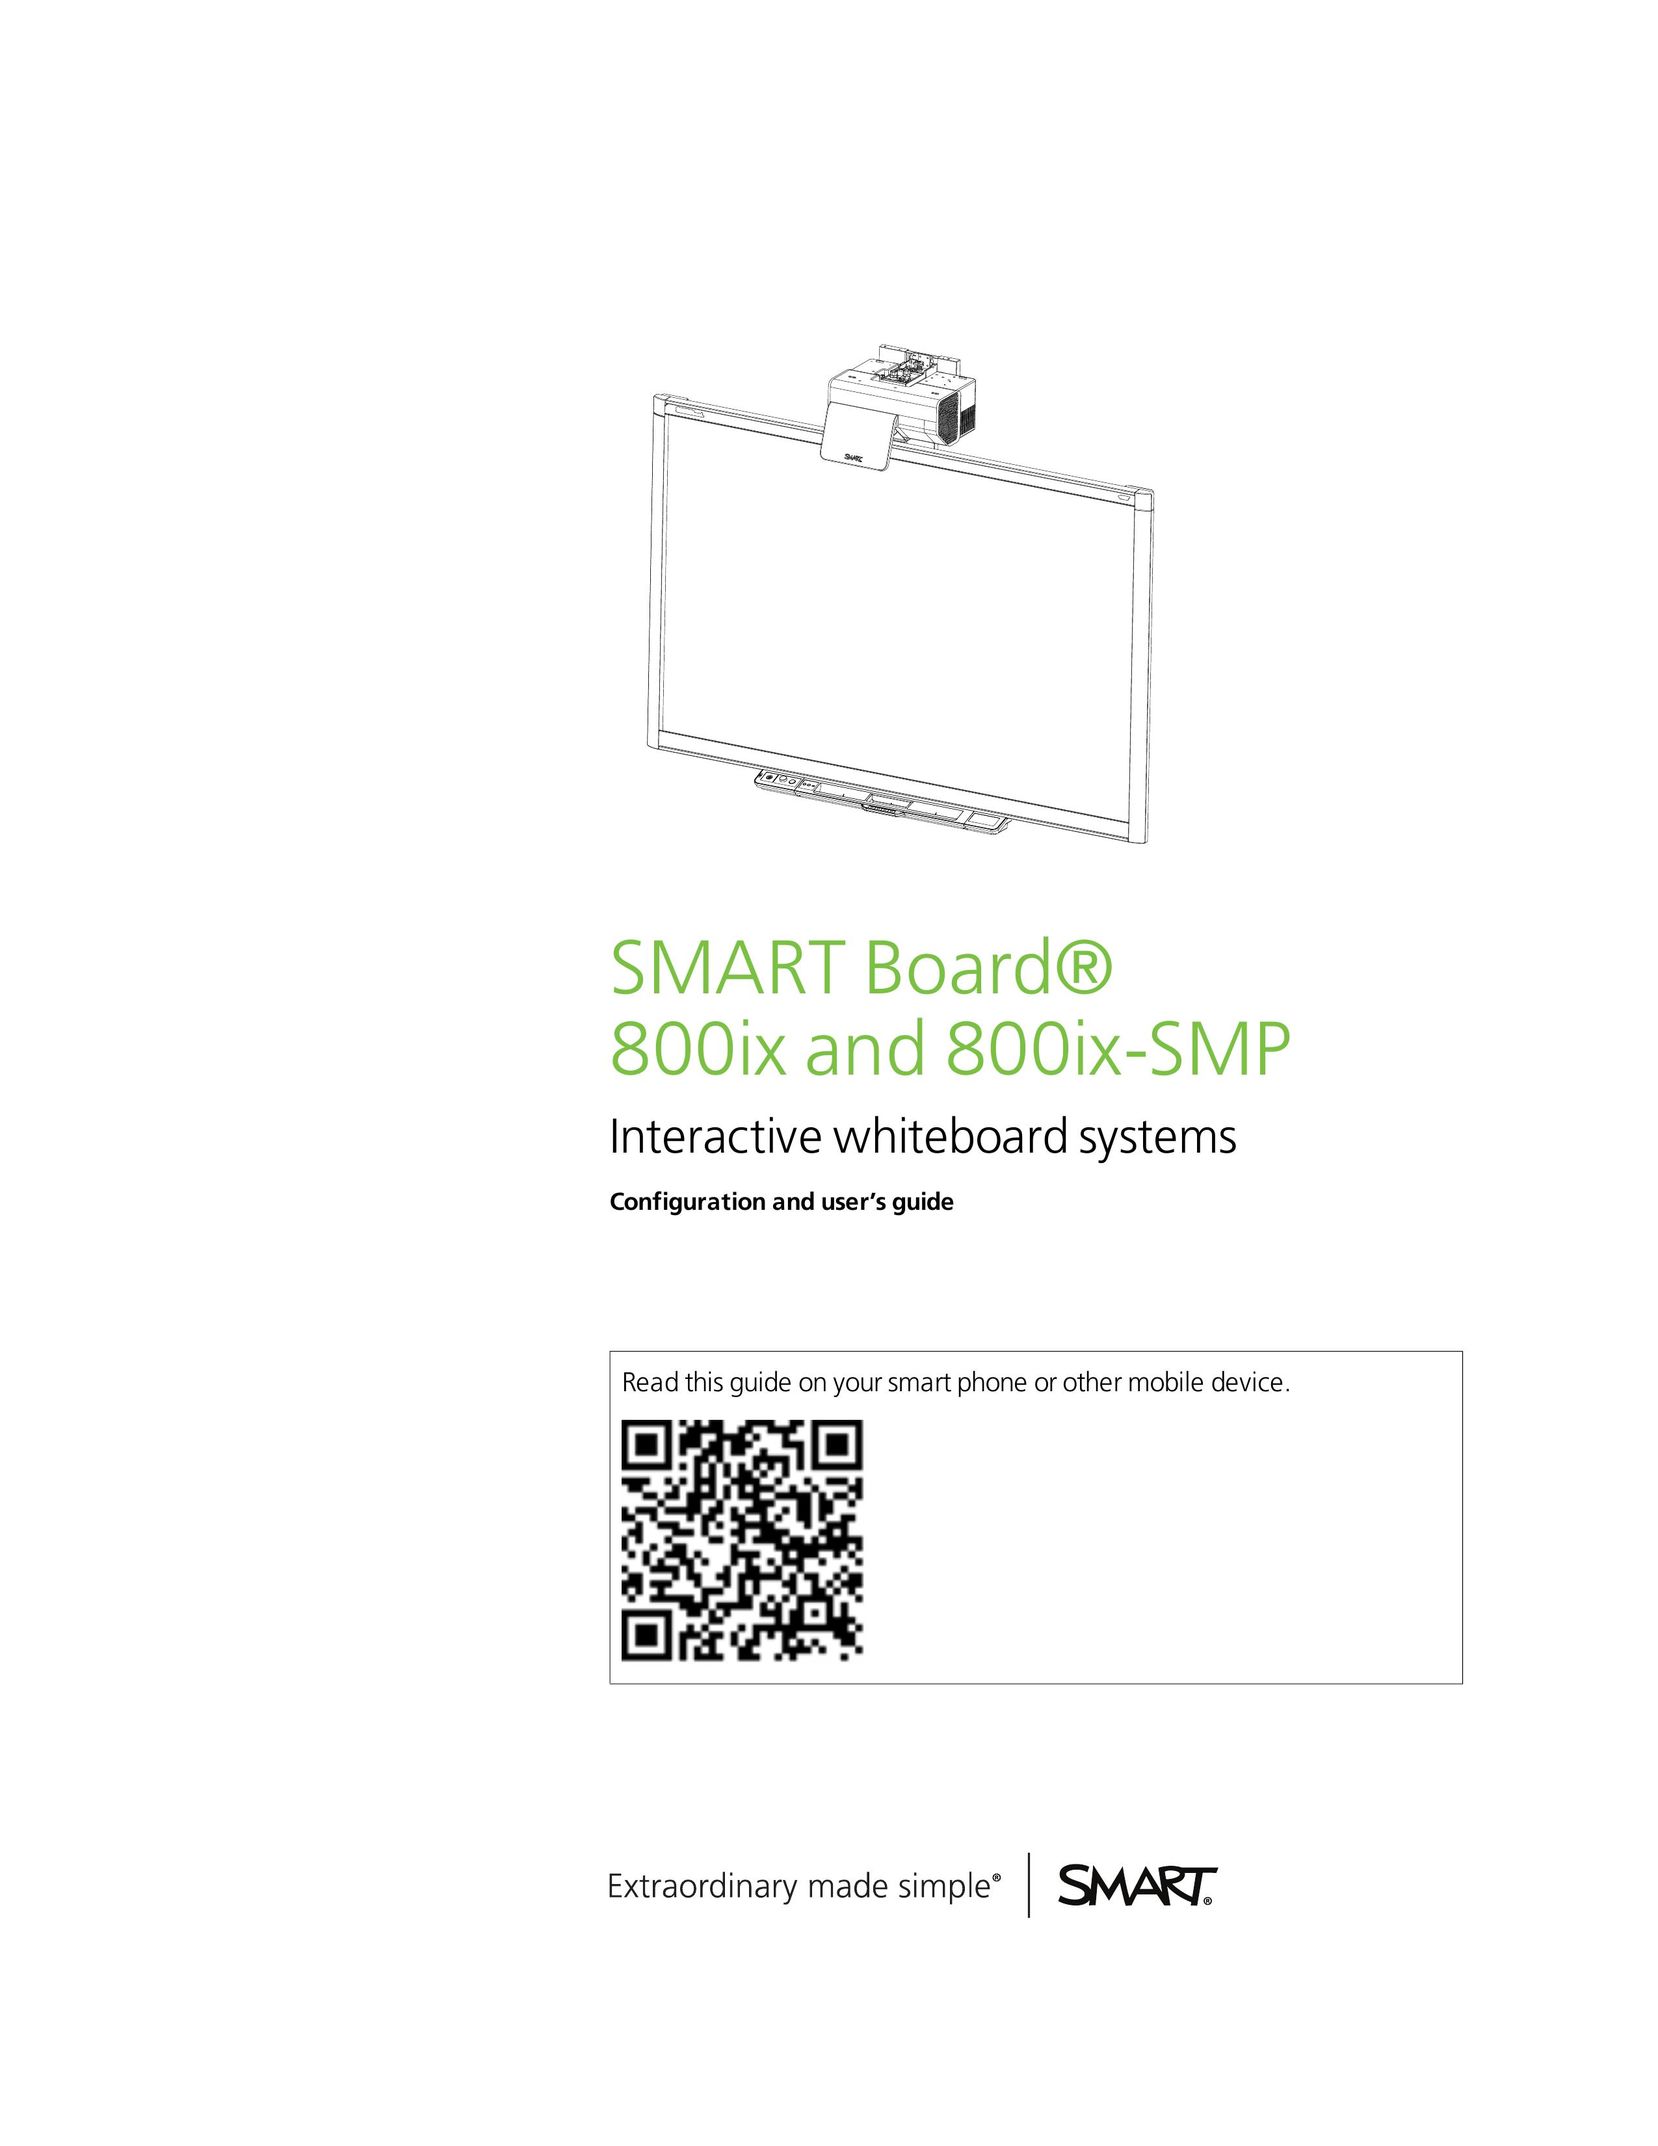 3Com 800ix-SMP Dishwasher User Manual